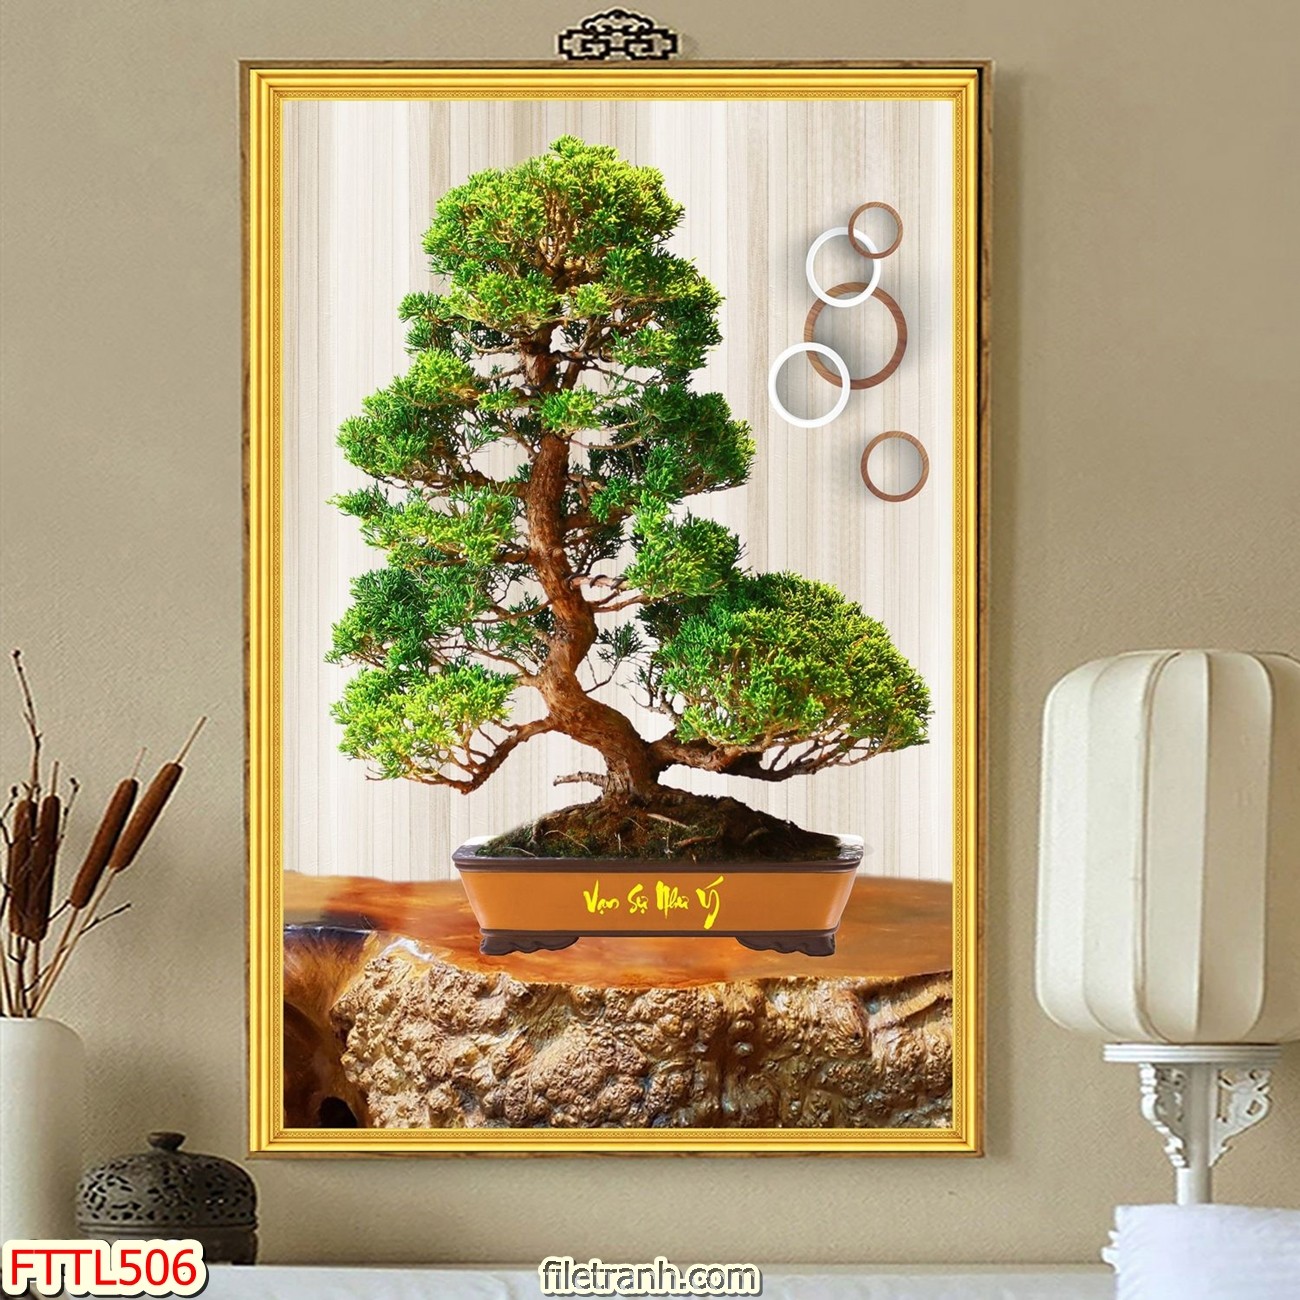 https://filetranh.com/file-tranh-chau-mai-bonsai/file-tranh-chau-mai-bonsai-fttl506.html